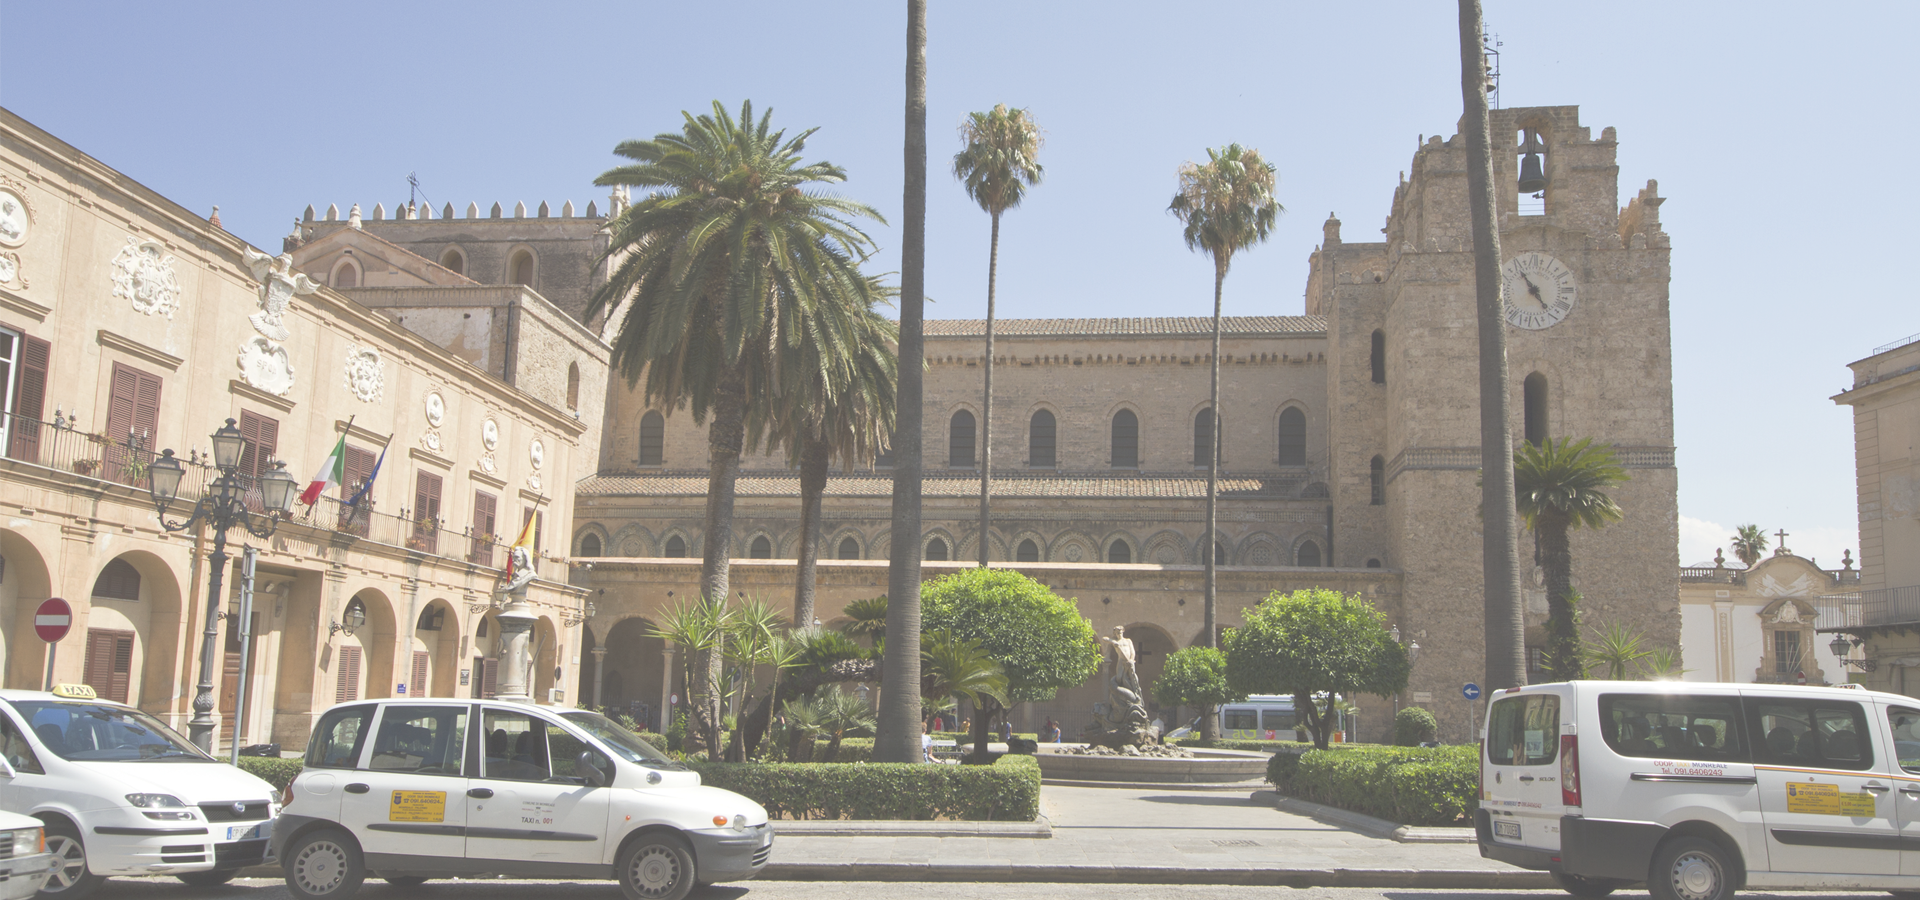 <b>Monreale, Metropolitan City of Palermo, Sicily, Italy</b>